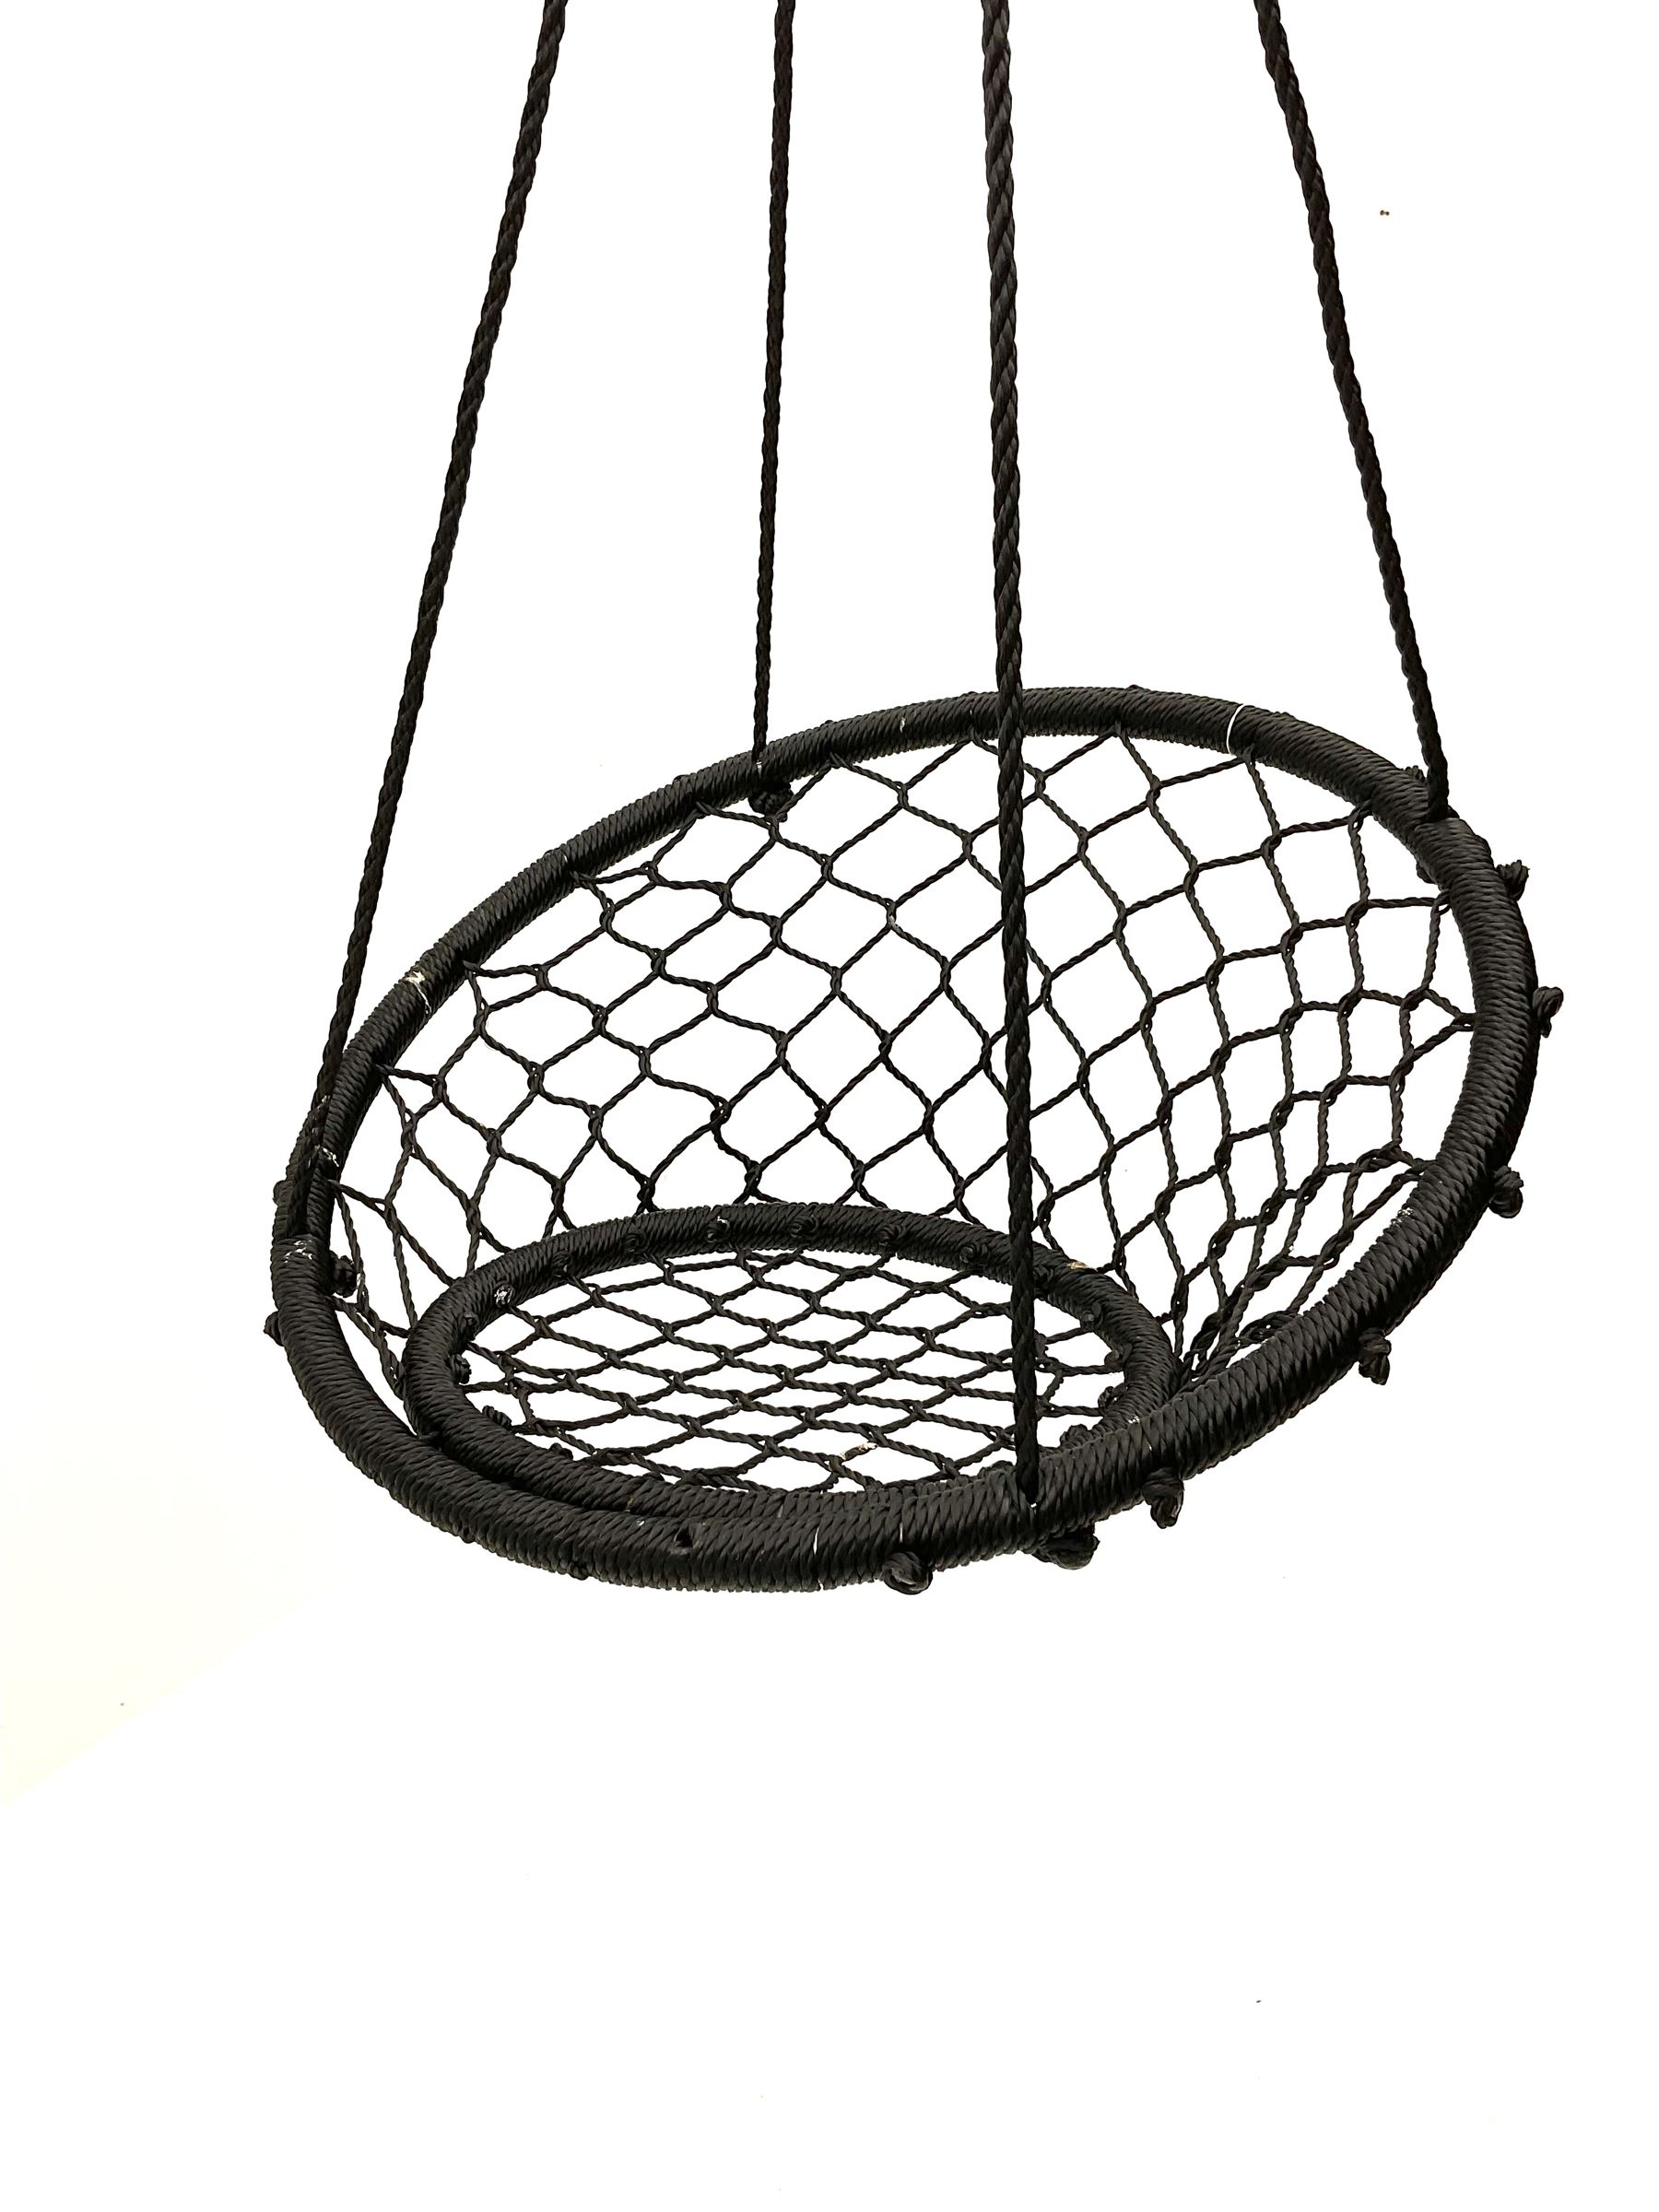 Rope basket chair swing - Image 2 of 2